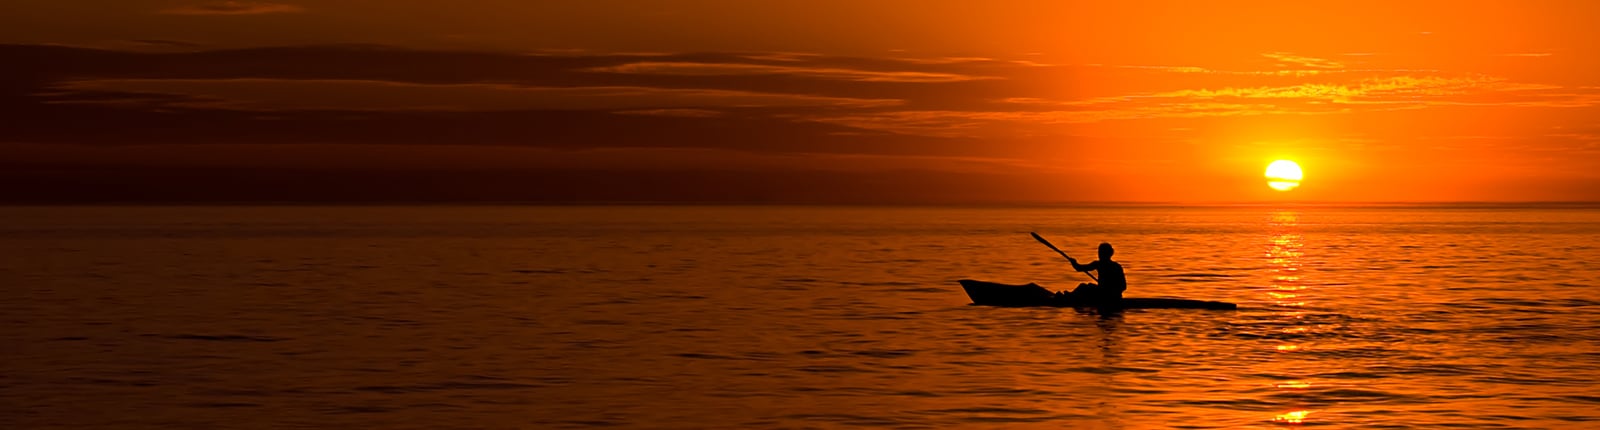 Kayak in the ocean during sunset in Freeport, Bahamas